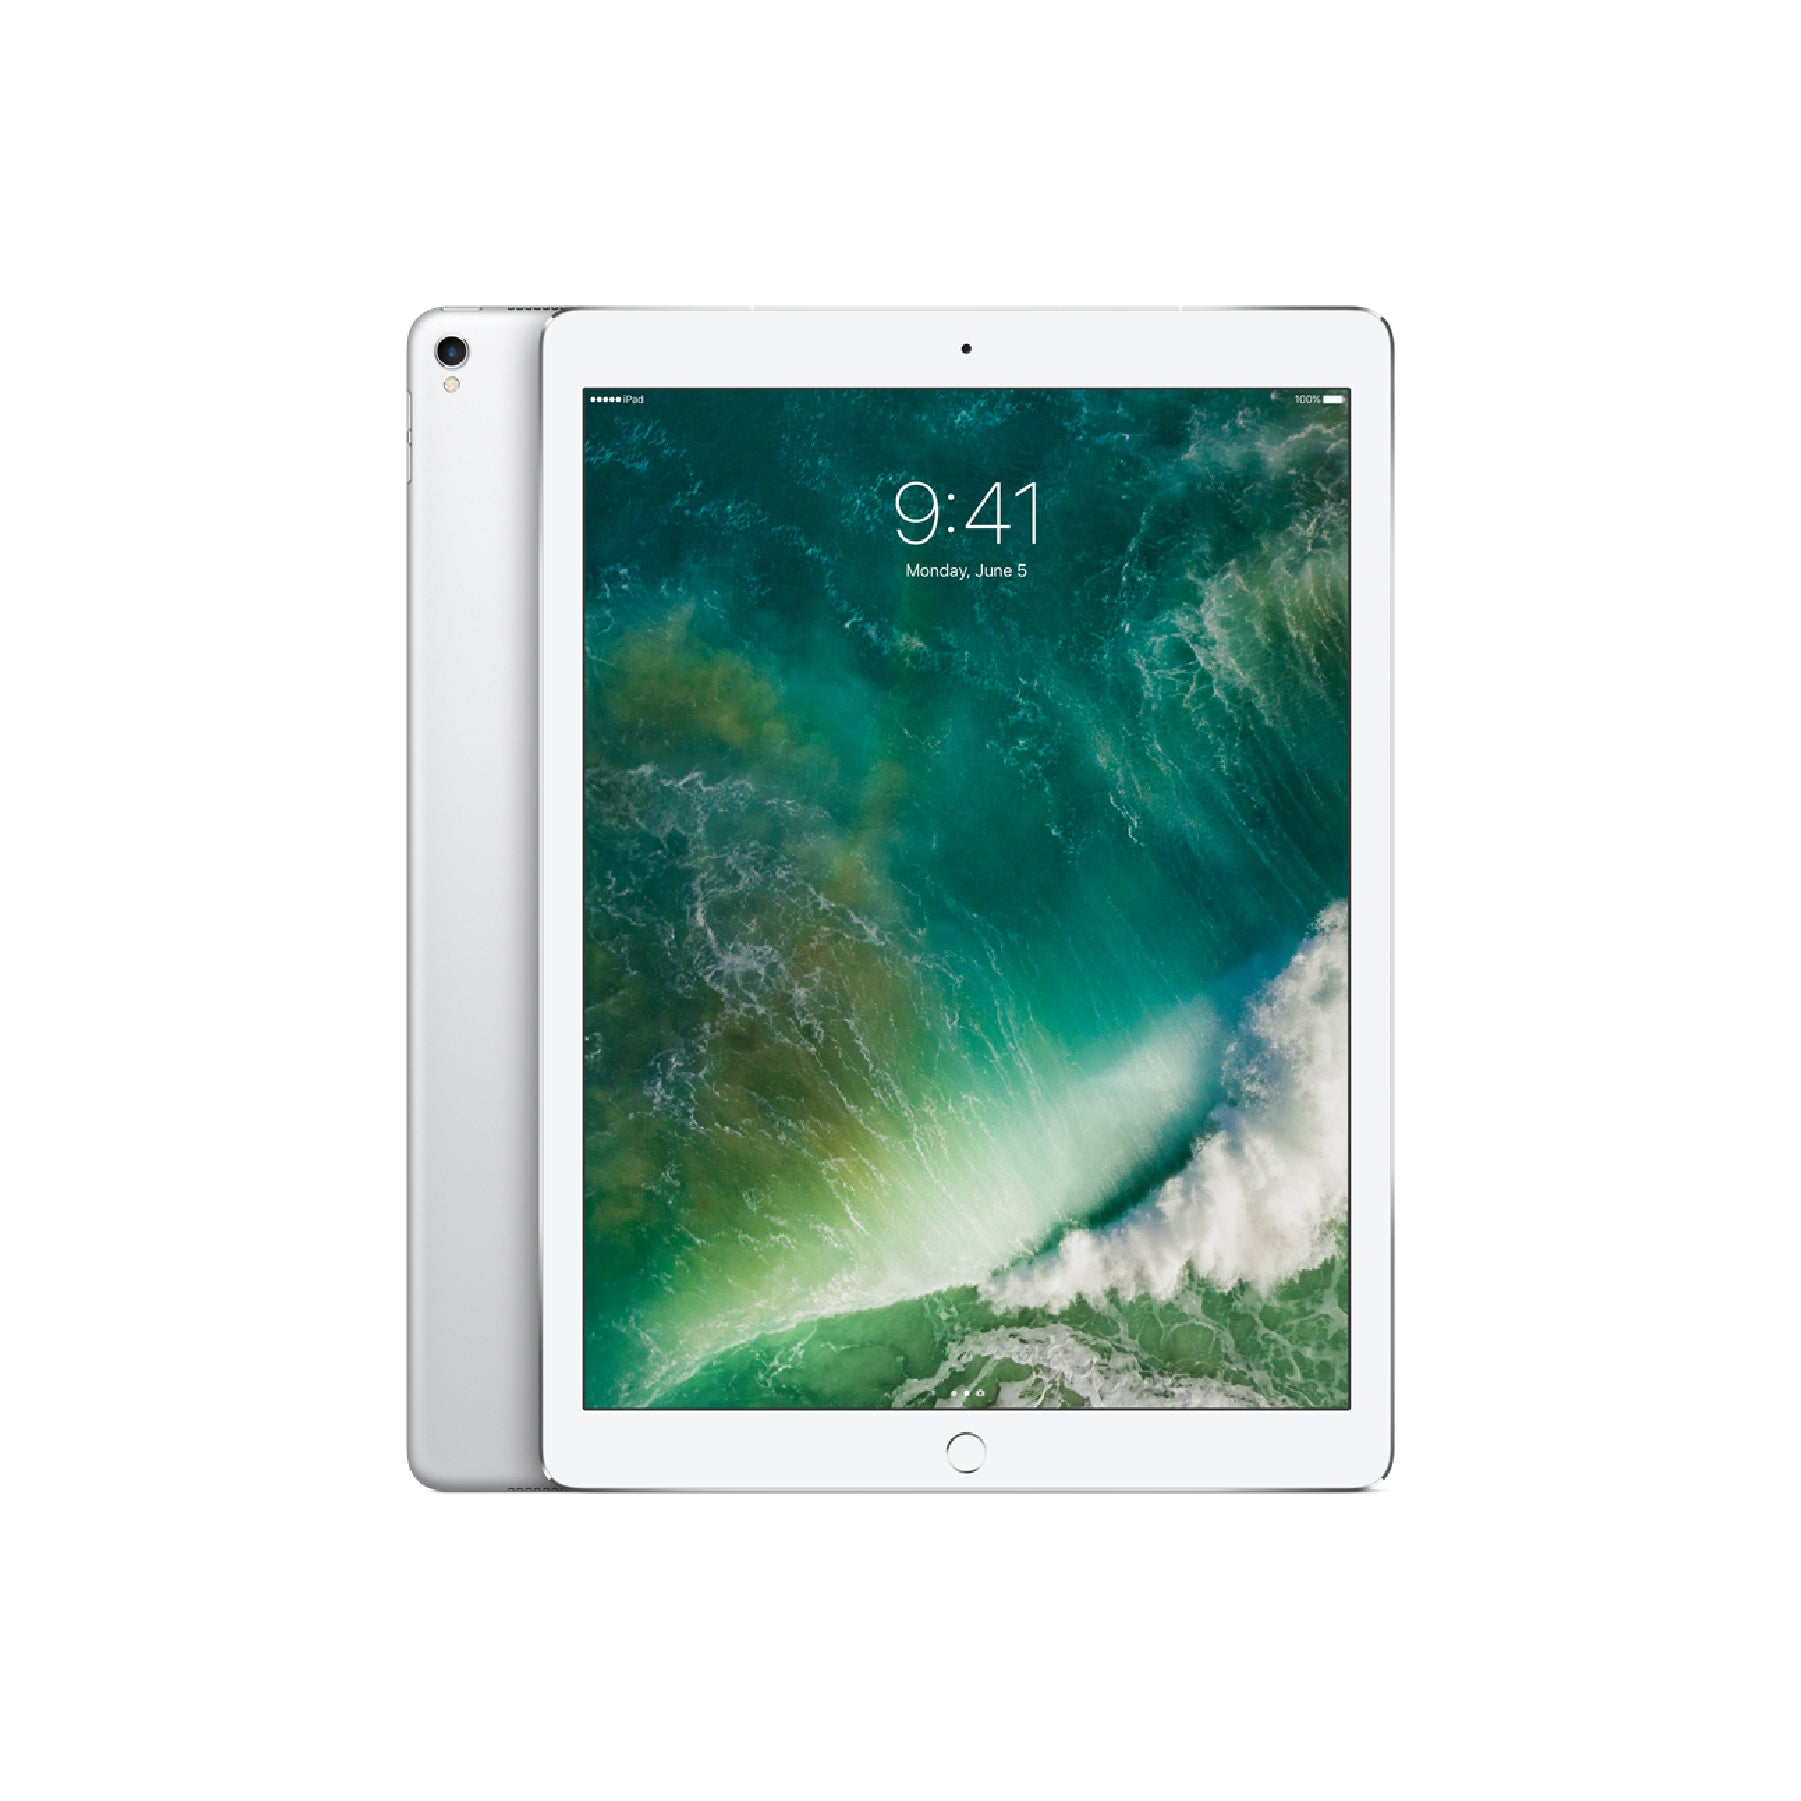 iPad Pro (10.5-inch, 2017) Wi-Fi 64GB - Silver (Better)